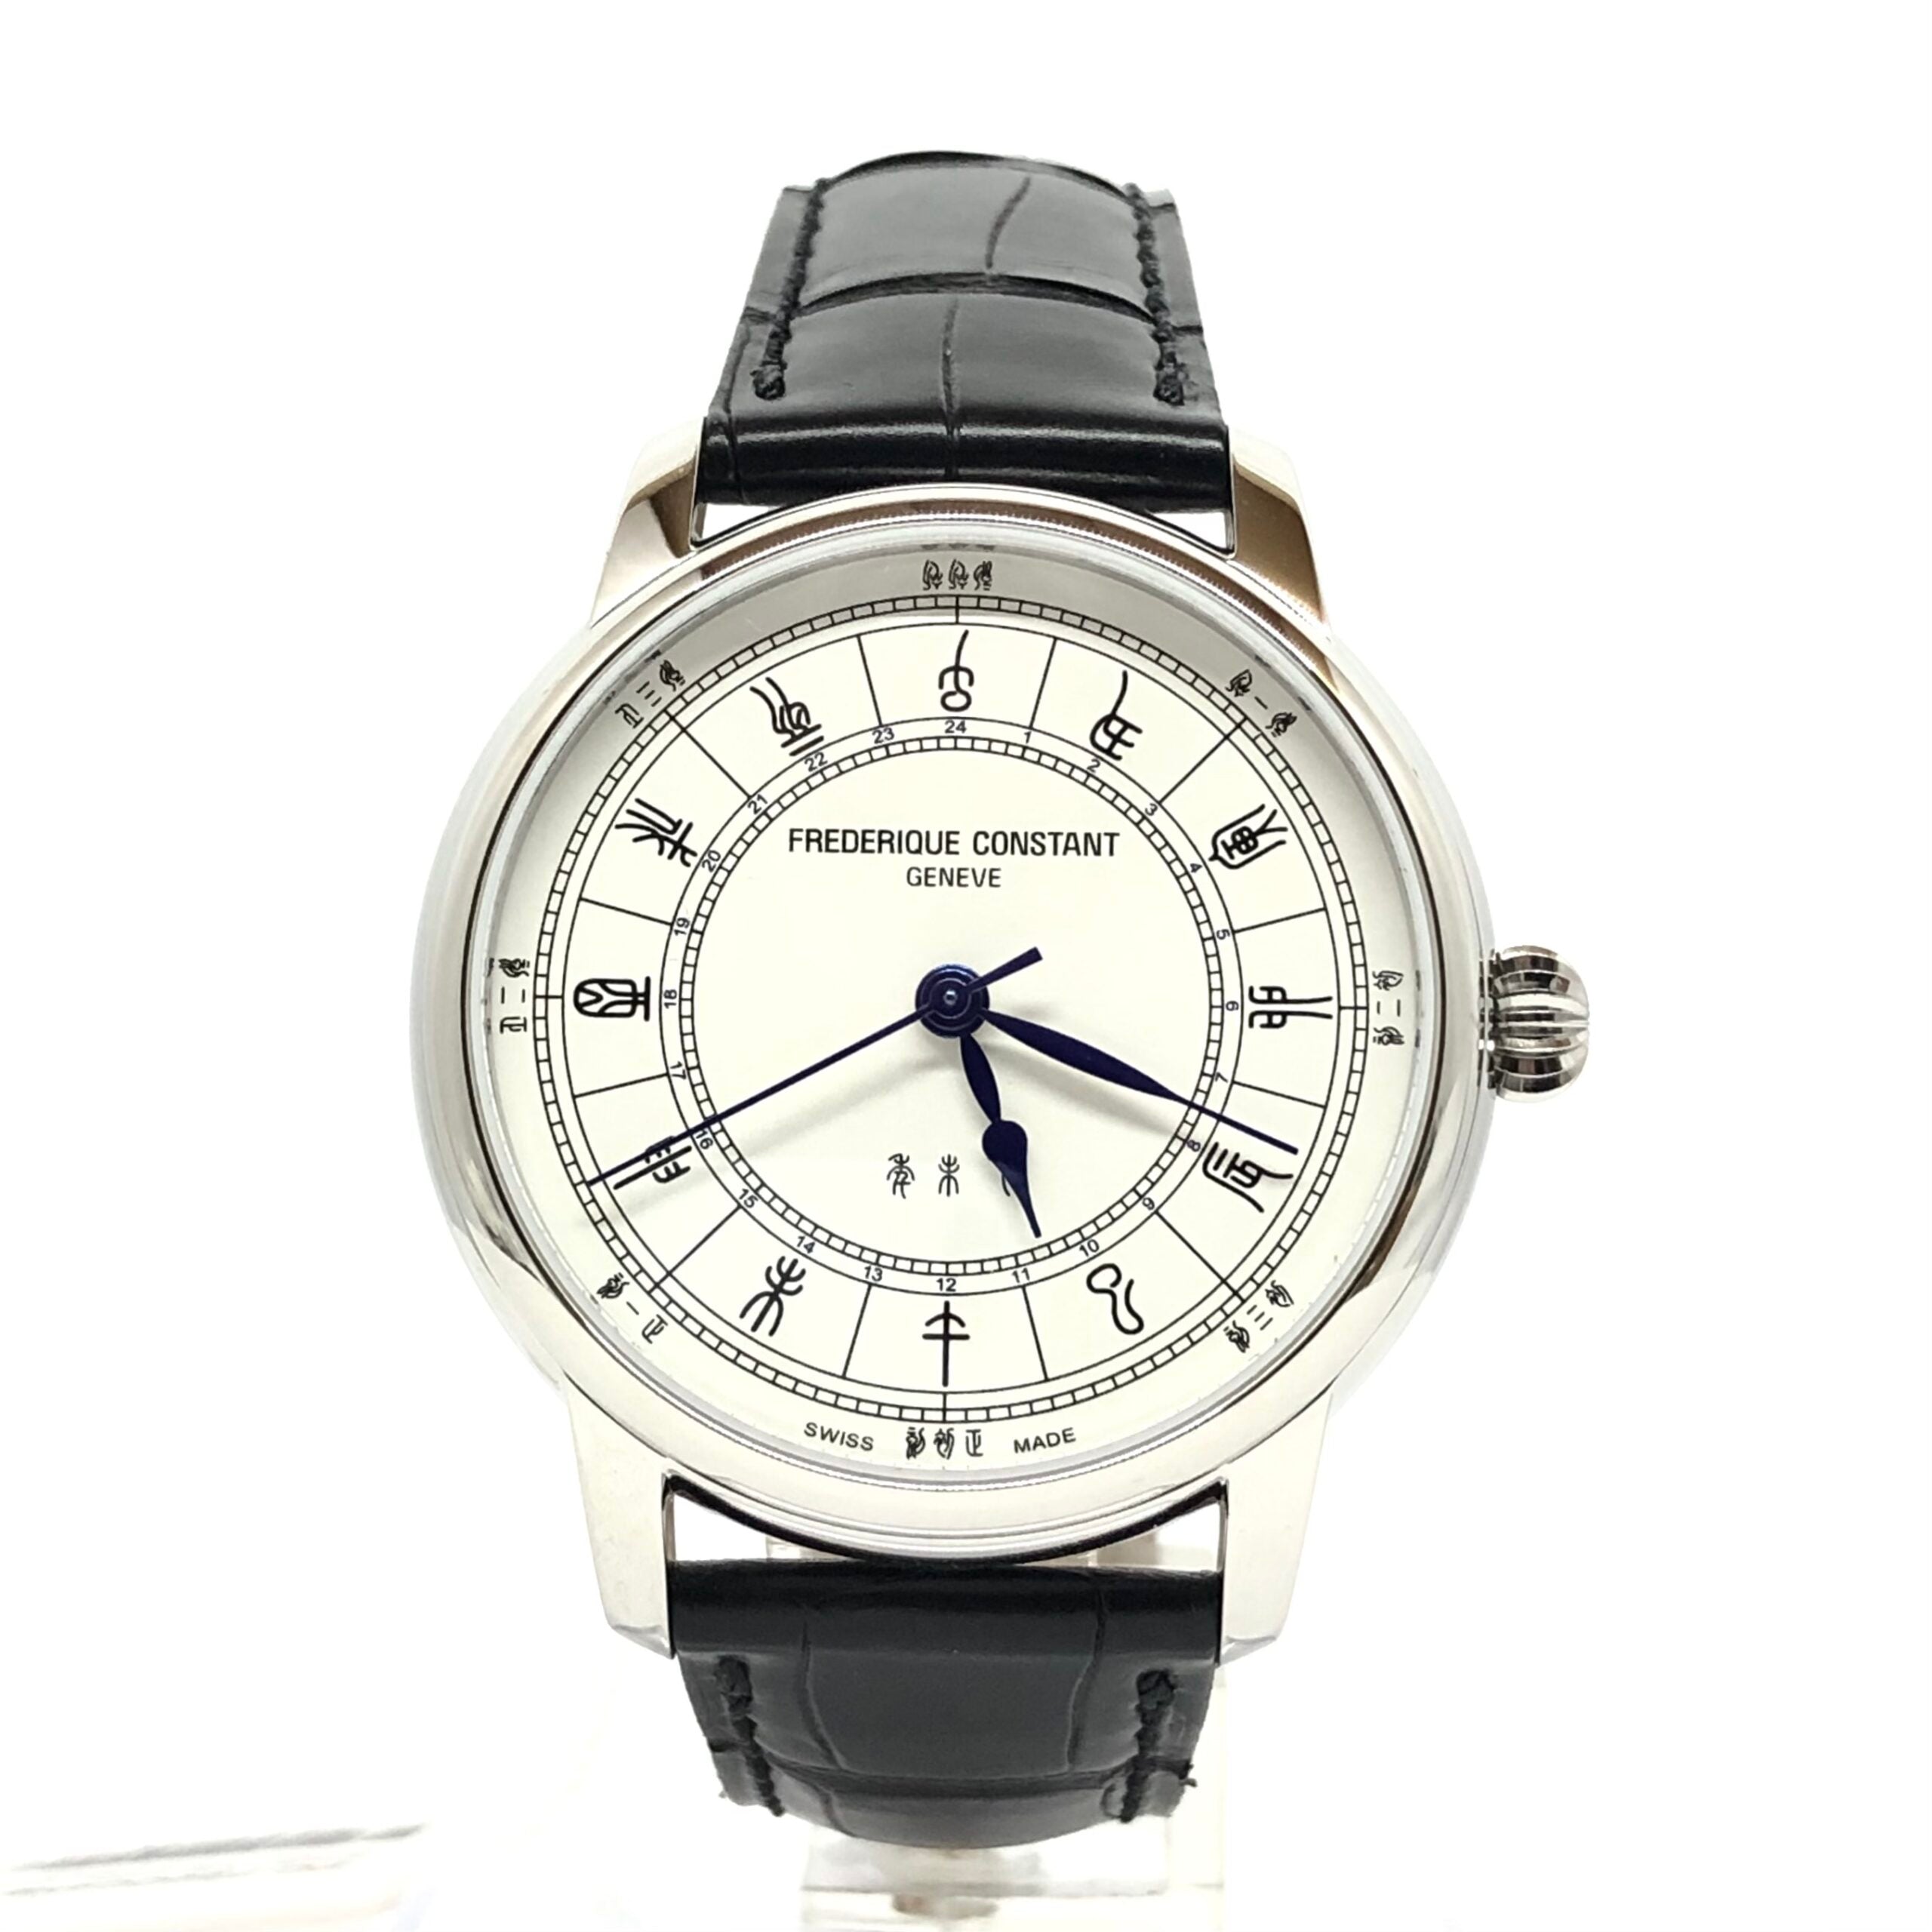 Frederique Constant Manufacture Zodiac Automatic Limited Edition Watch